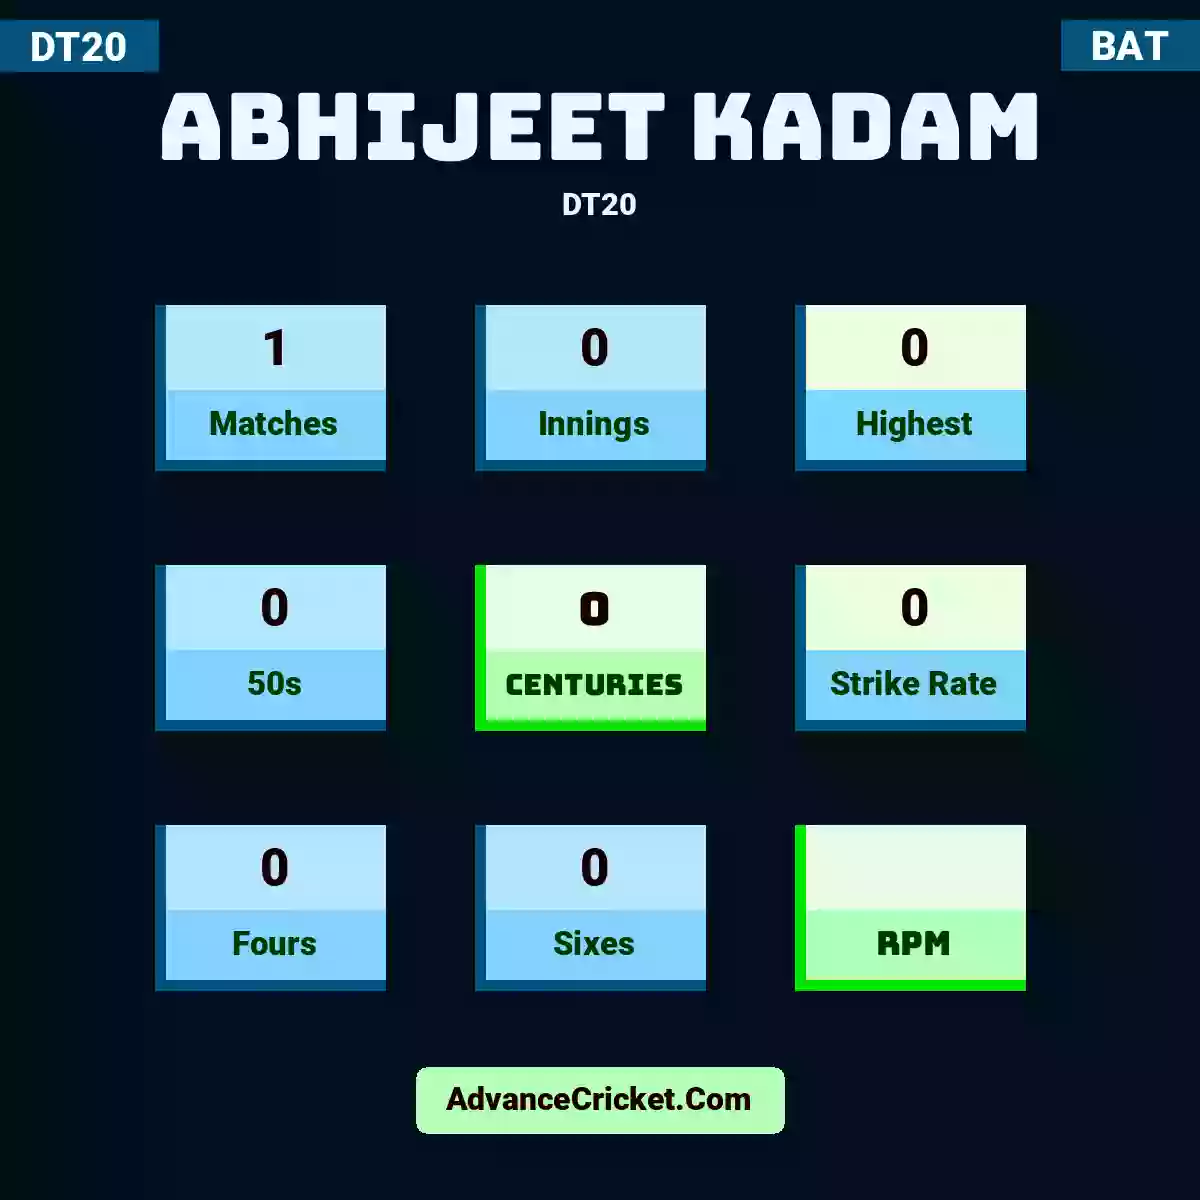 Abhijeet Kadam DT20 , Abhijeet Kadam played 1 matches, scored 0 runs as highest, 0 half-centuries, and 0 centuries, with a strike rate of 0. A.Kadam hit 0 fours and 0 sixes.